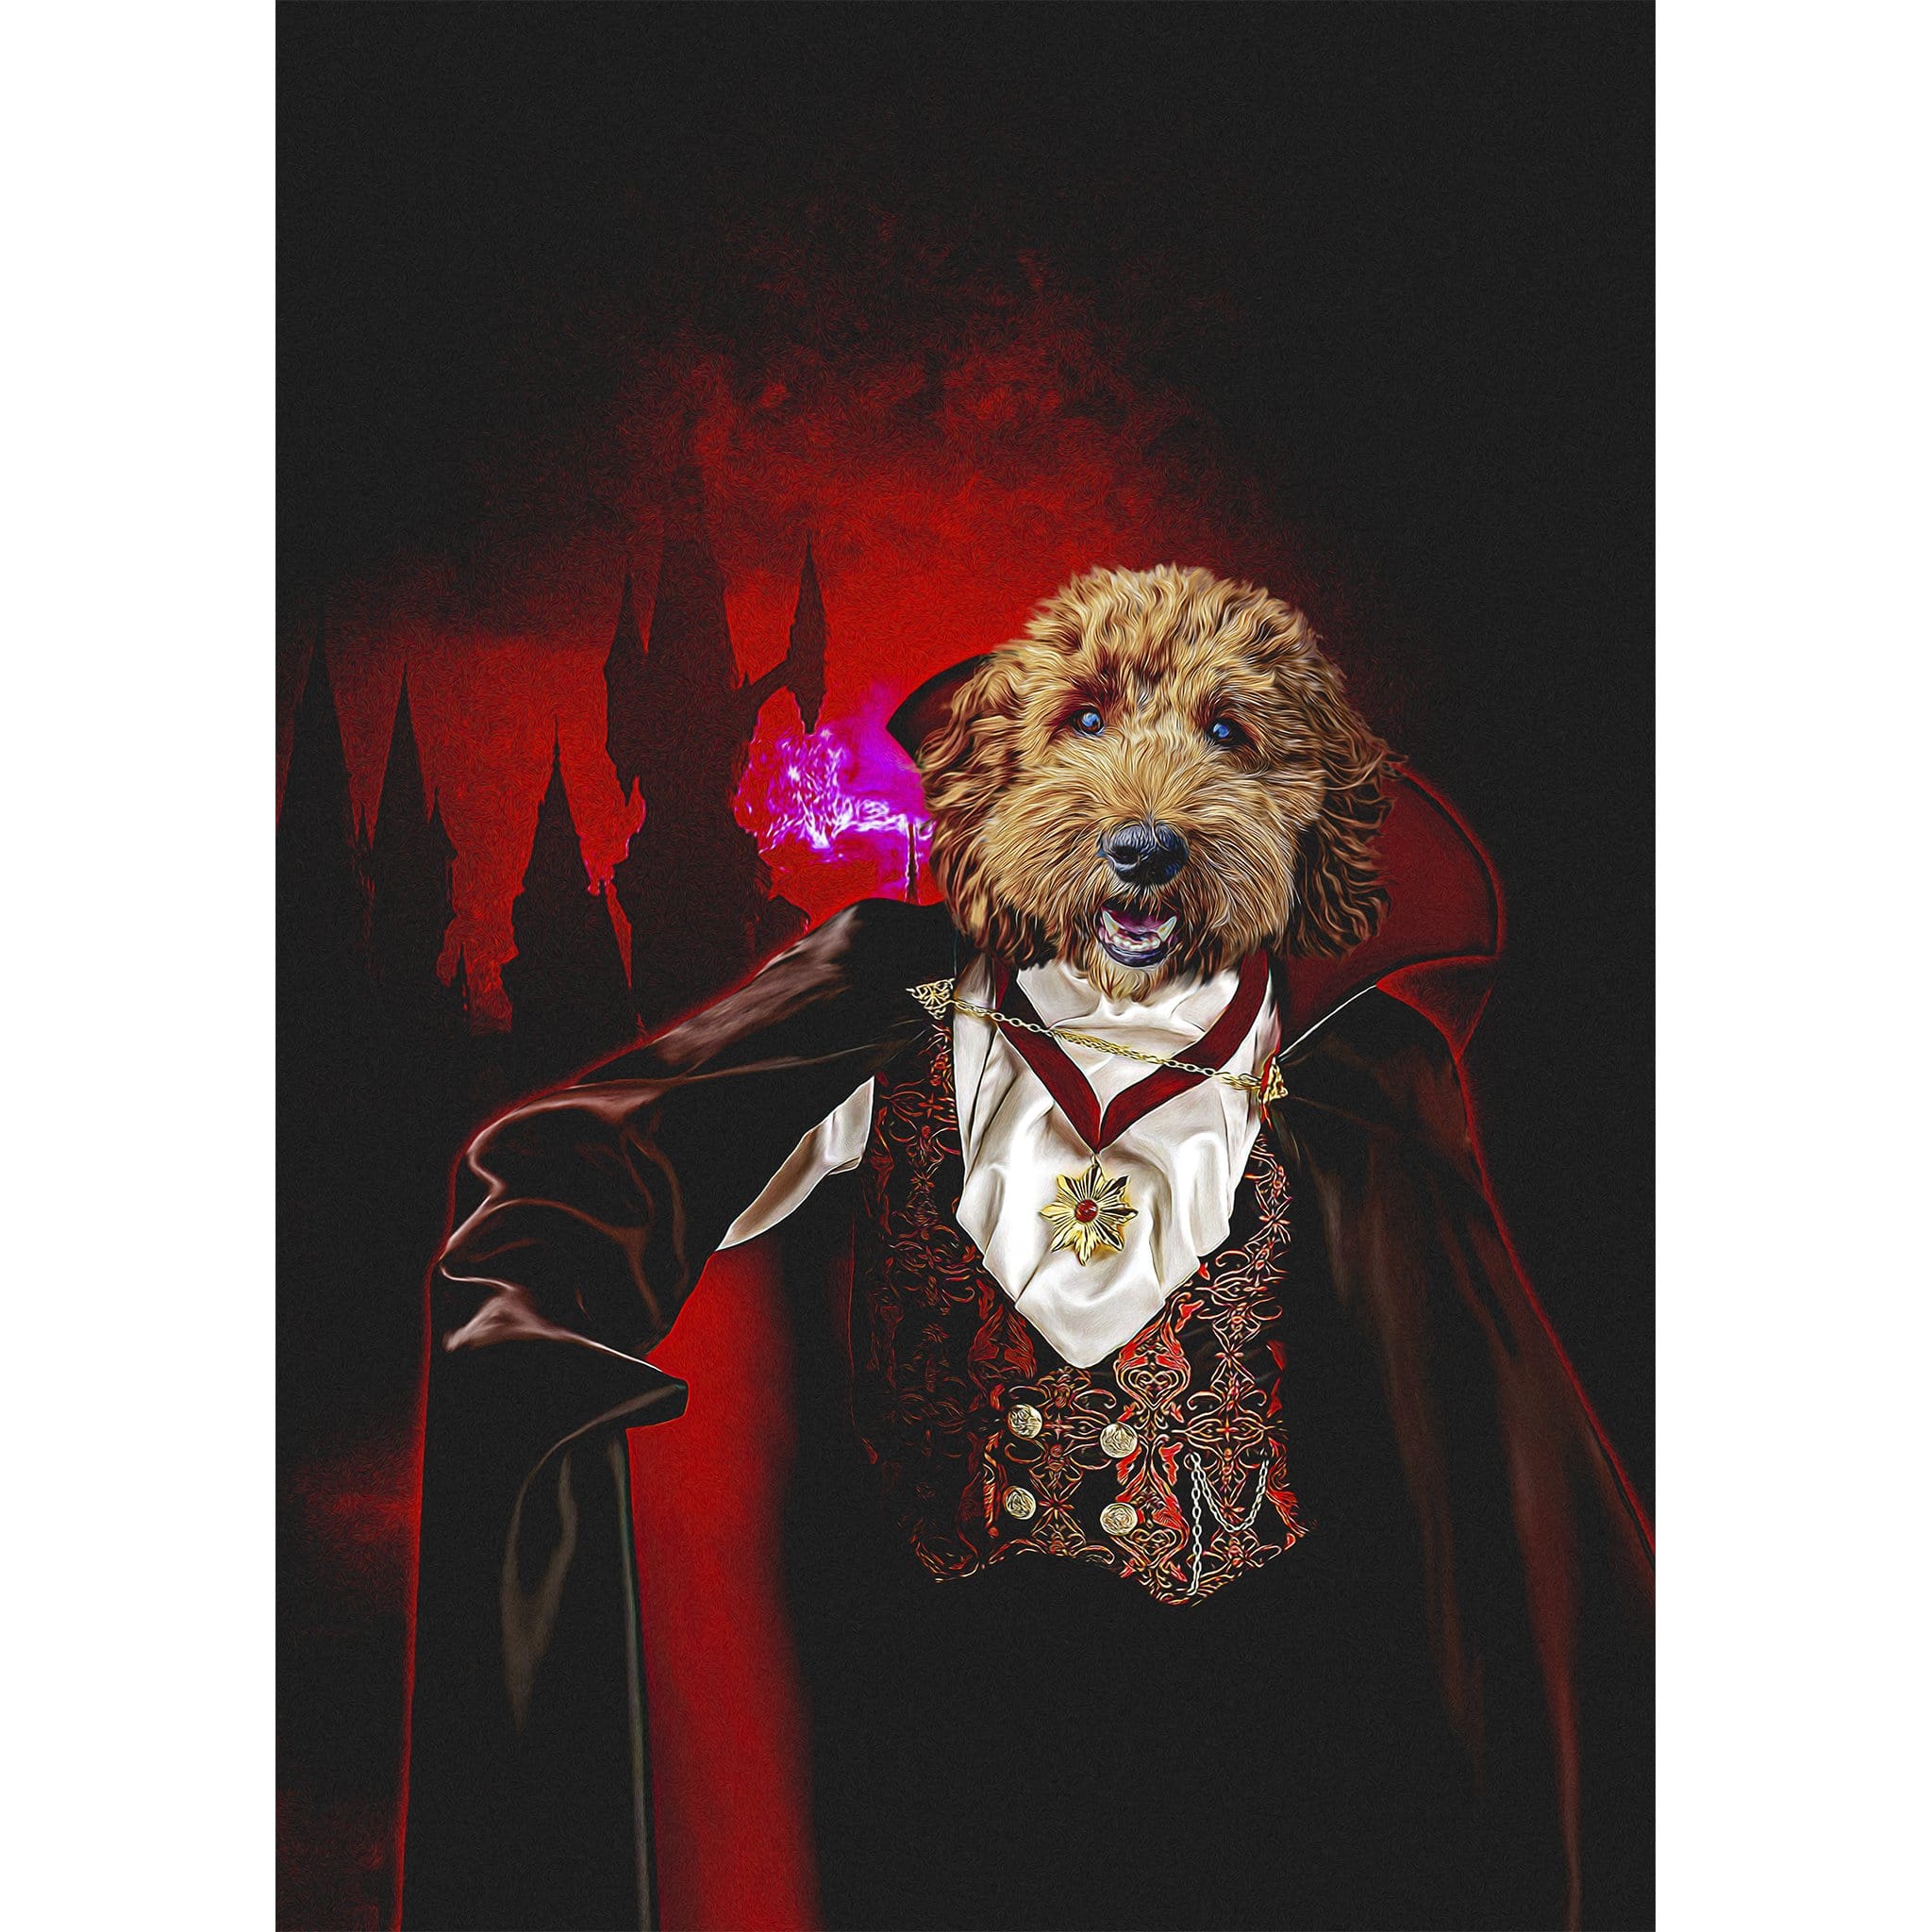 'The Vampire' Digital Portrait